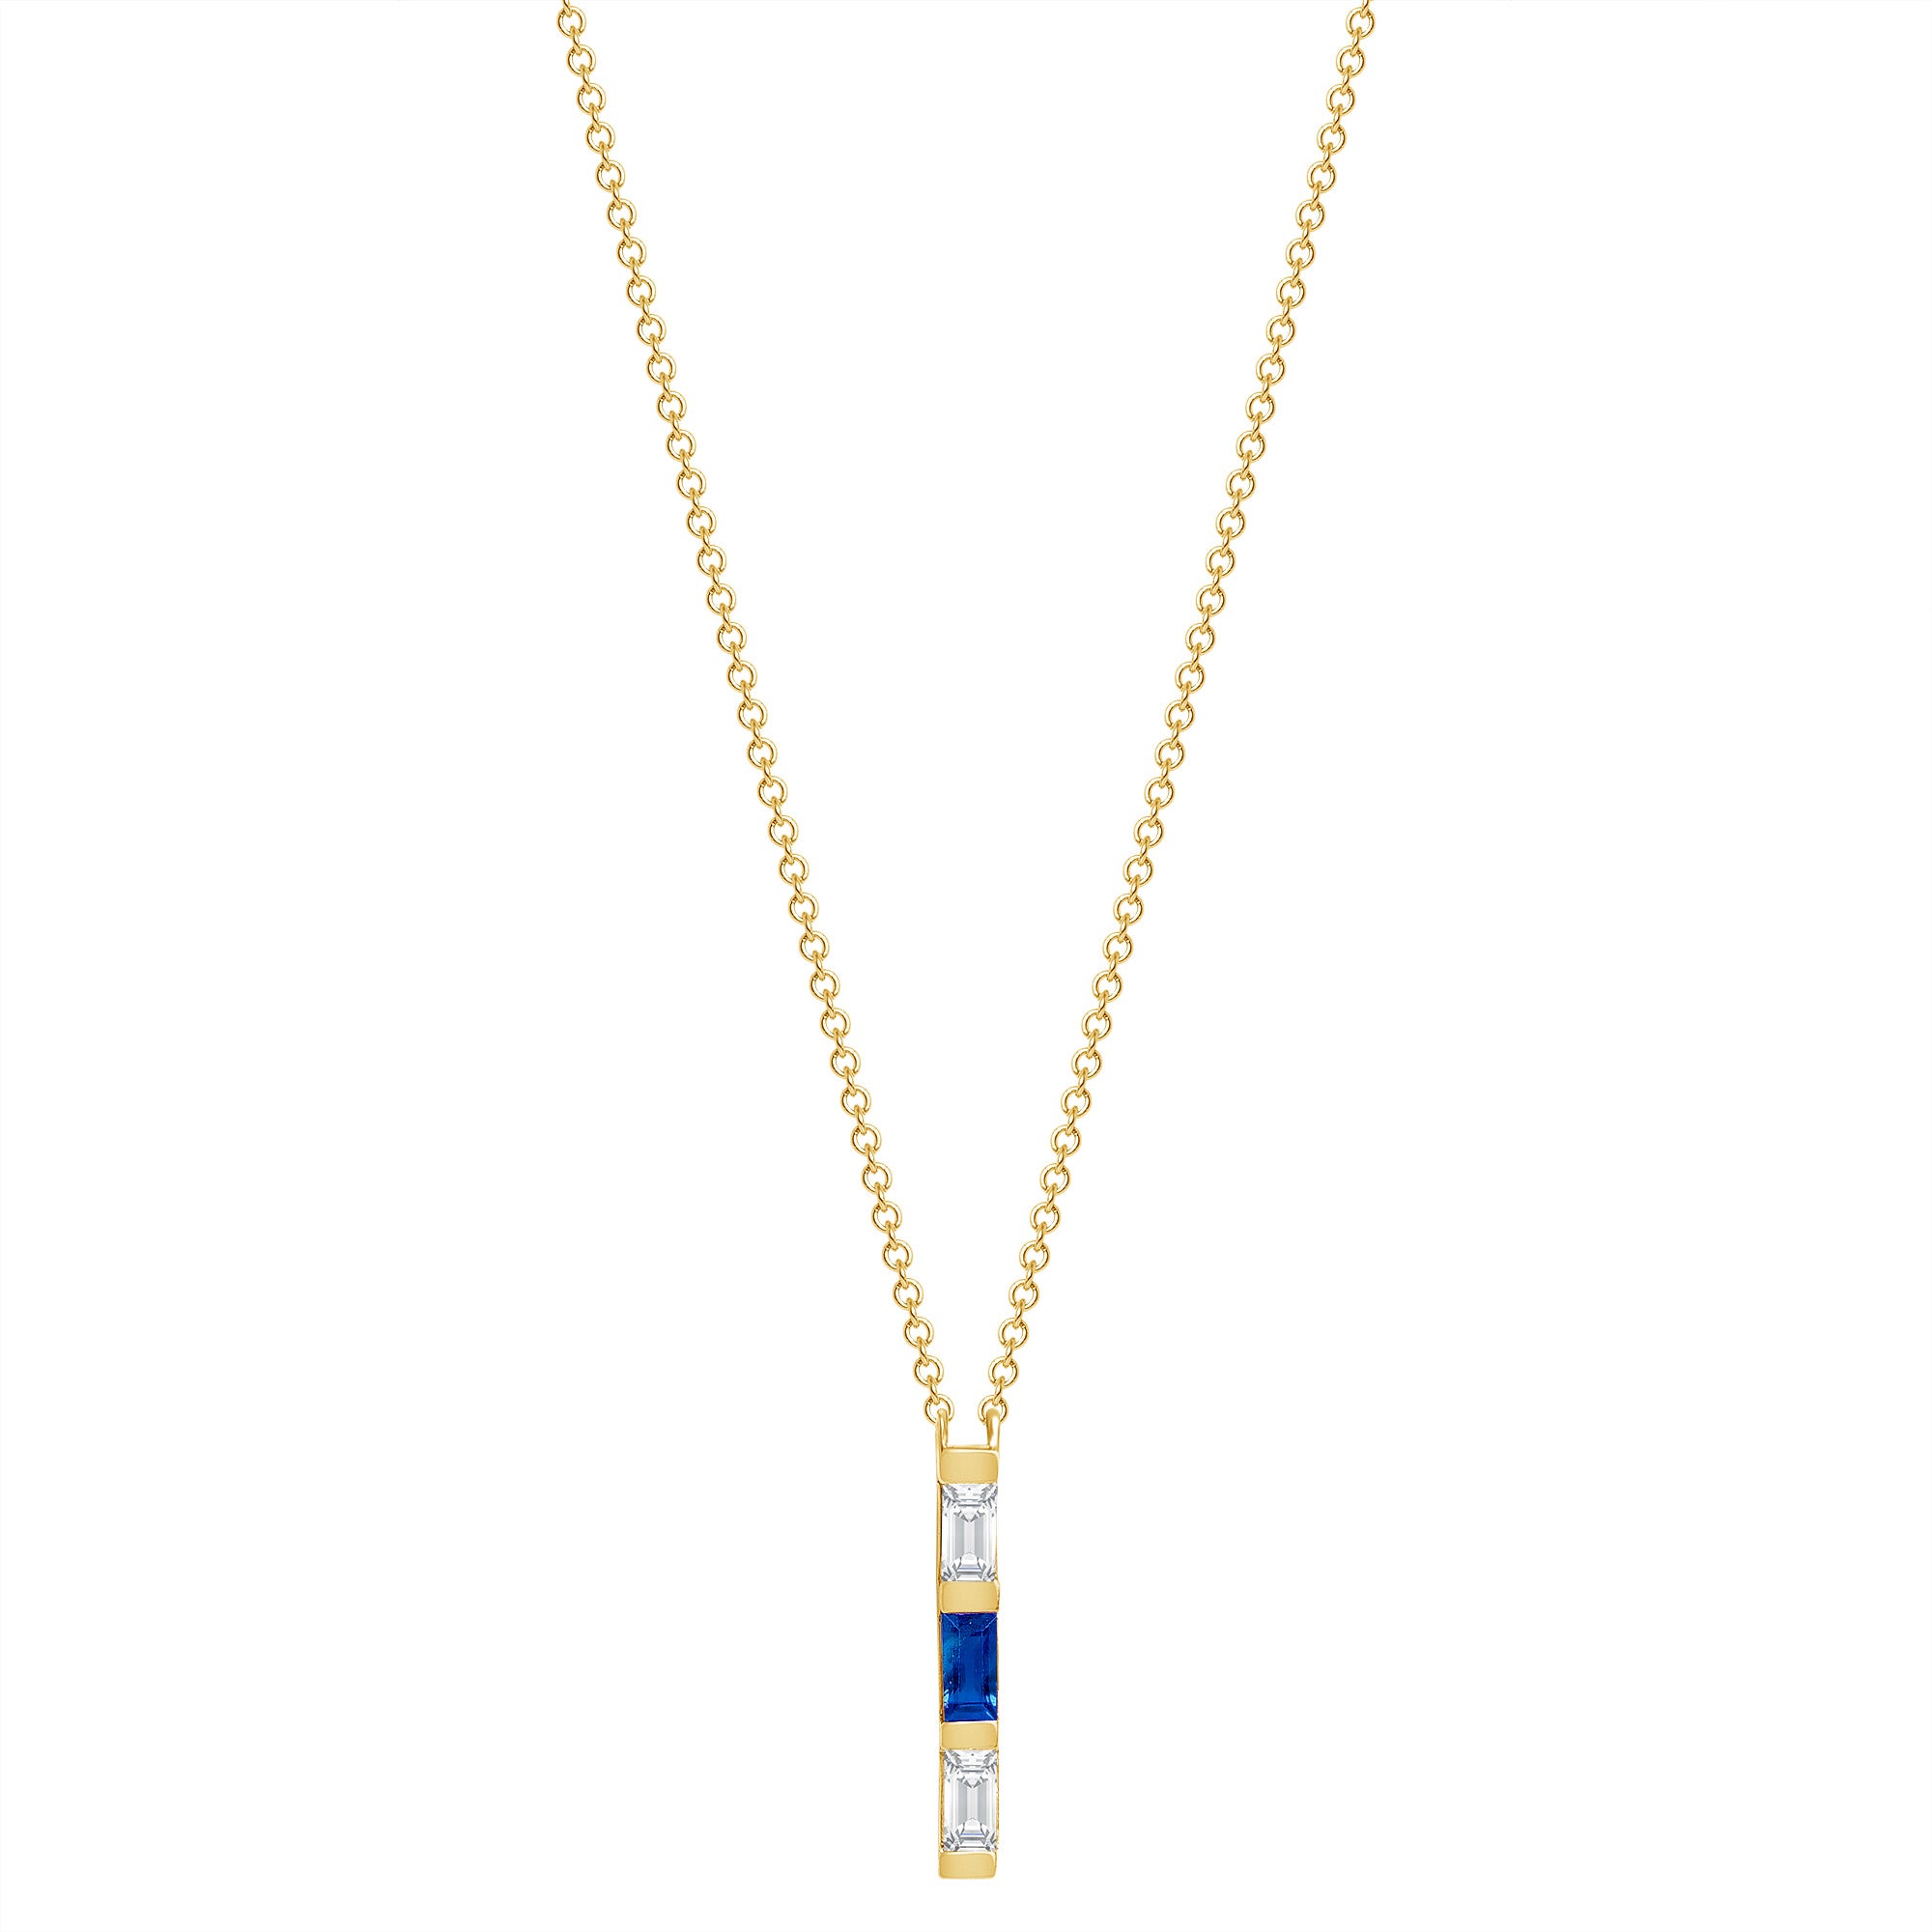 14K Yellow Gold Baguette Blue Sapphire & Diamond Bar Pendant,  Pendant, ABP-193.1V1Y-BSD, blue sapphire and diamond pendant, blue sapphire bar pendant, Belarino